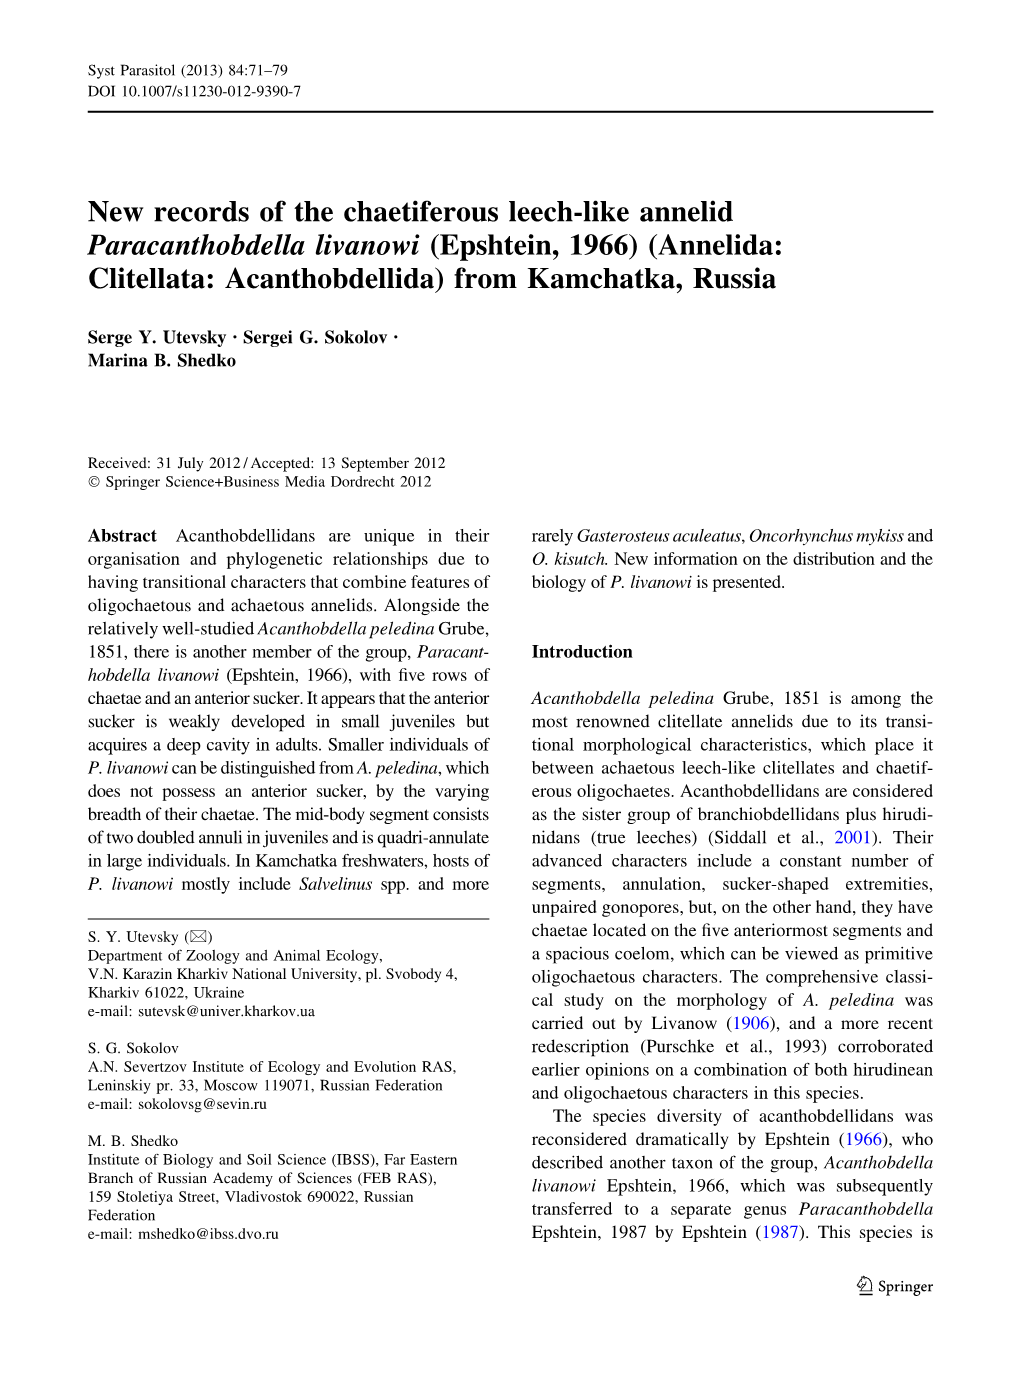 New Records of the Chaetiferous Leech-Like Annelid Paracanthobdella Livanowi (Epshtein, 1966) (Annelida: Clitellata: Acanthobdellida) from Kamchatka, Russia